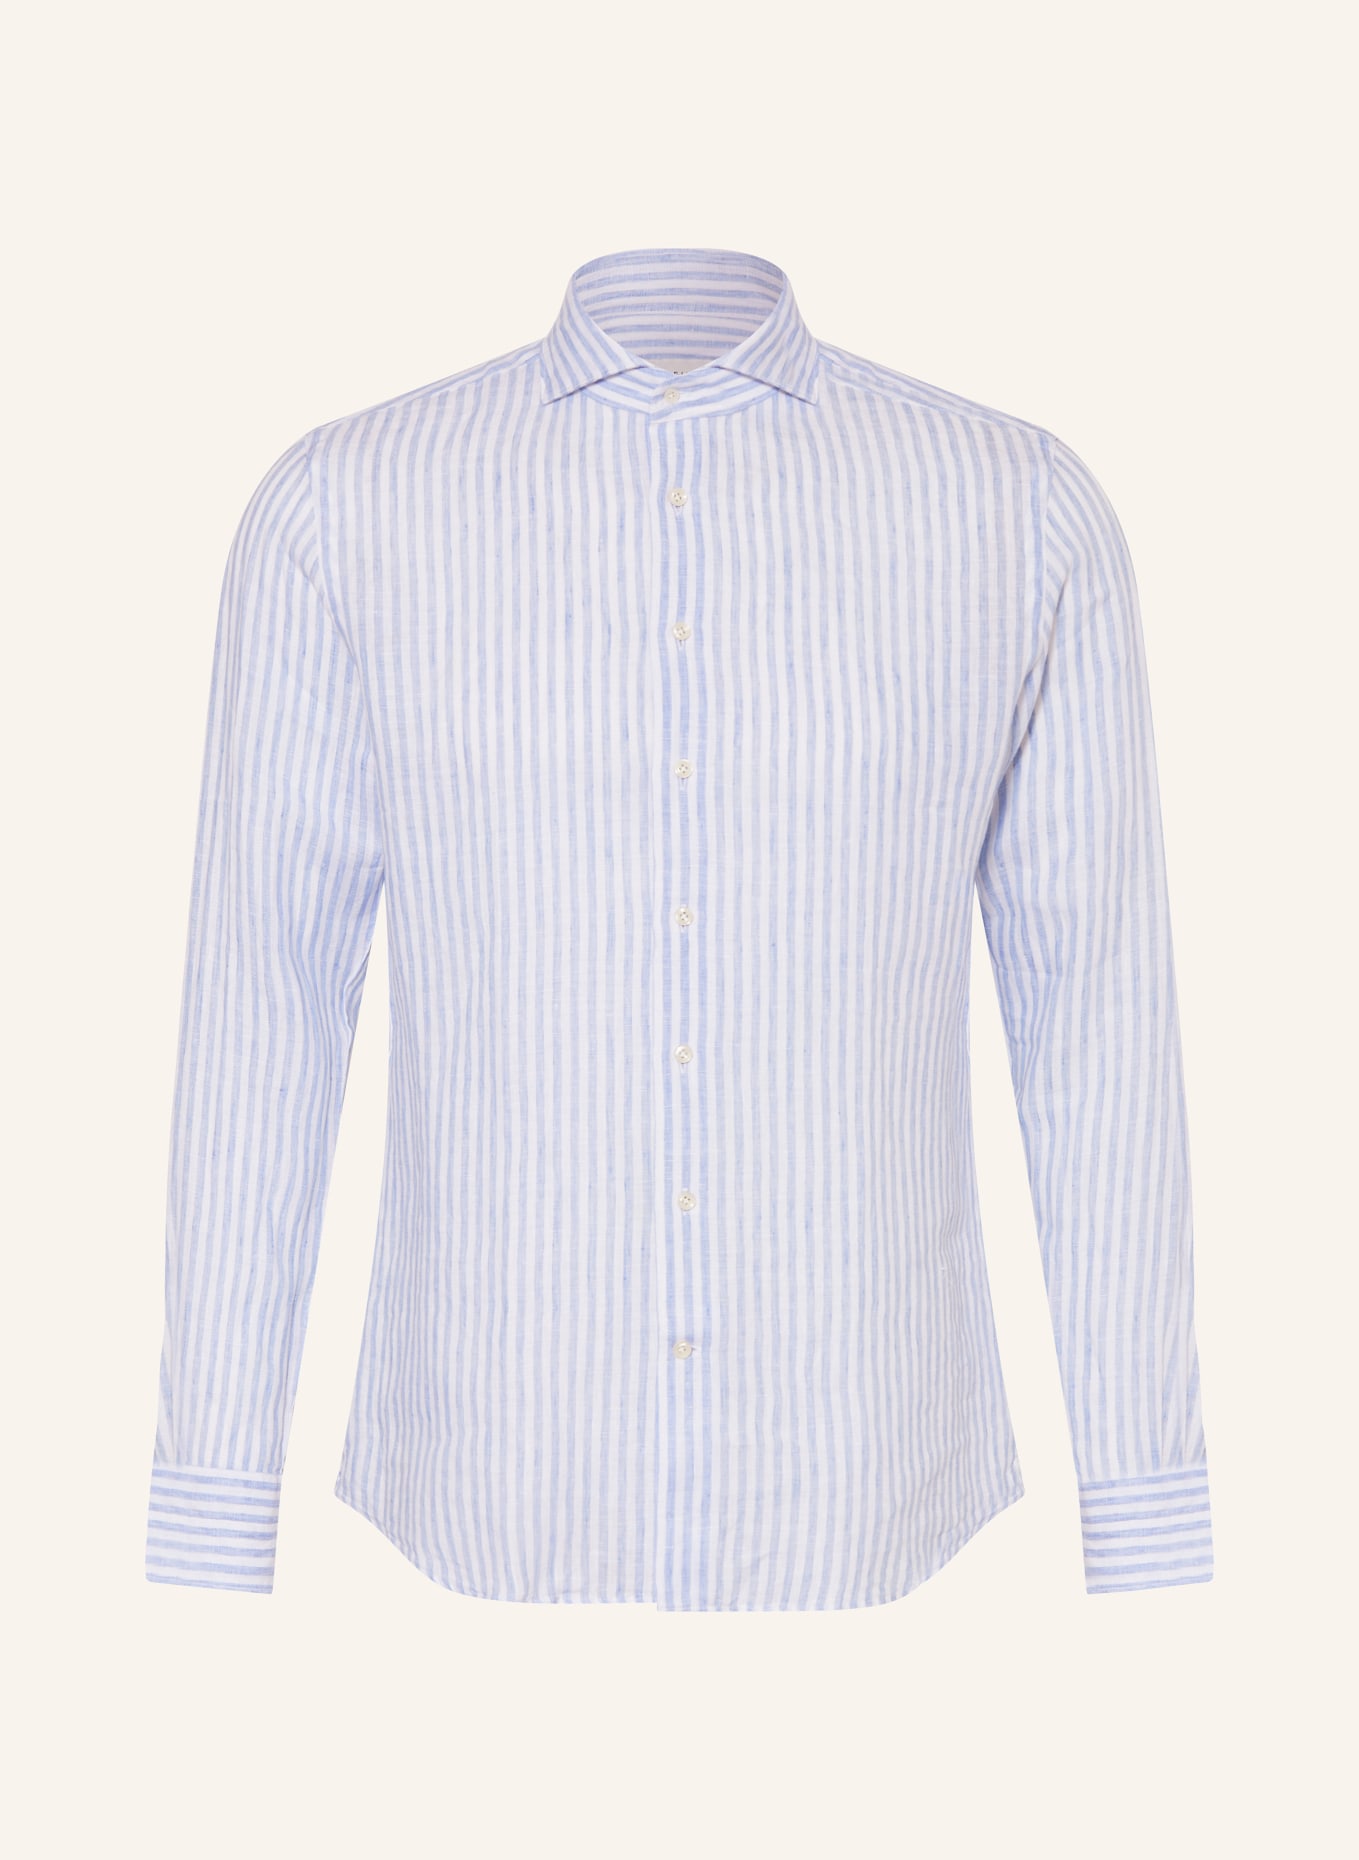 PROFUOMO Leinenhemd Regular Fit, Farbe: WEISS/ HELLBLAU (Bild 1)